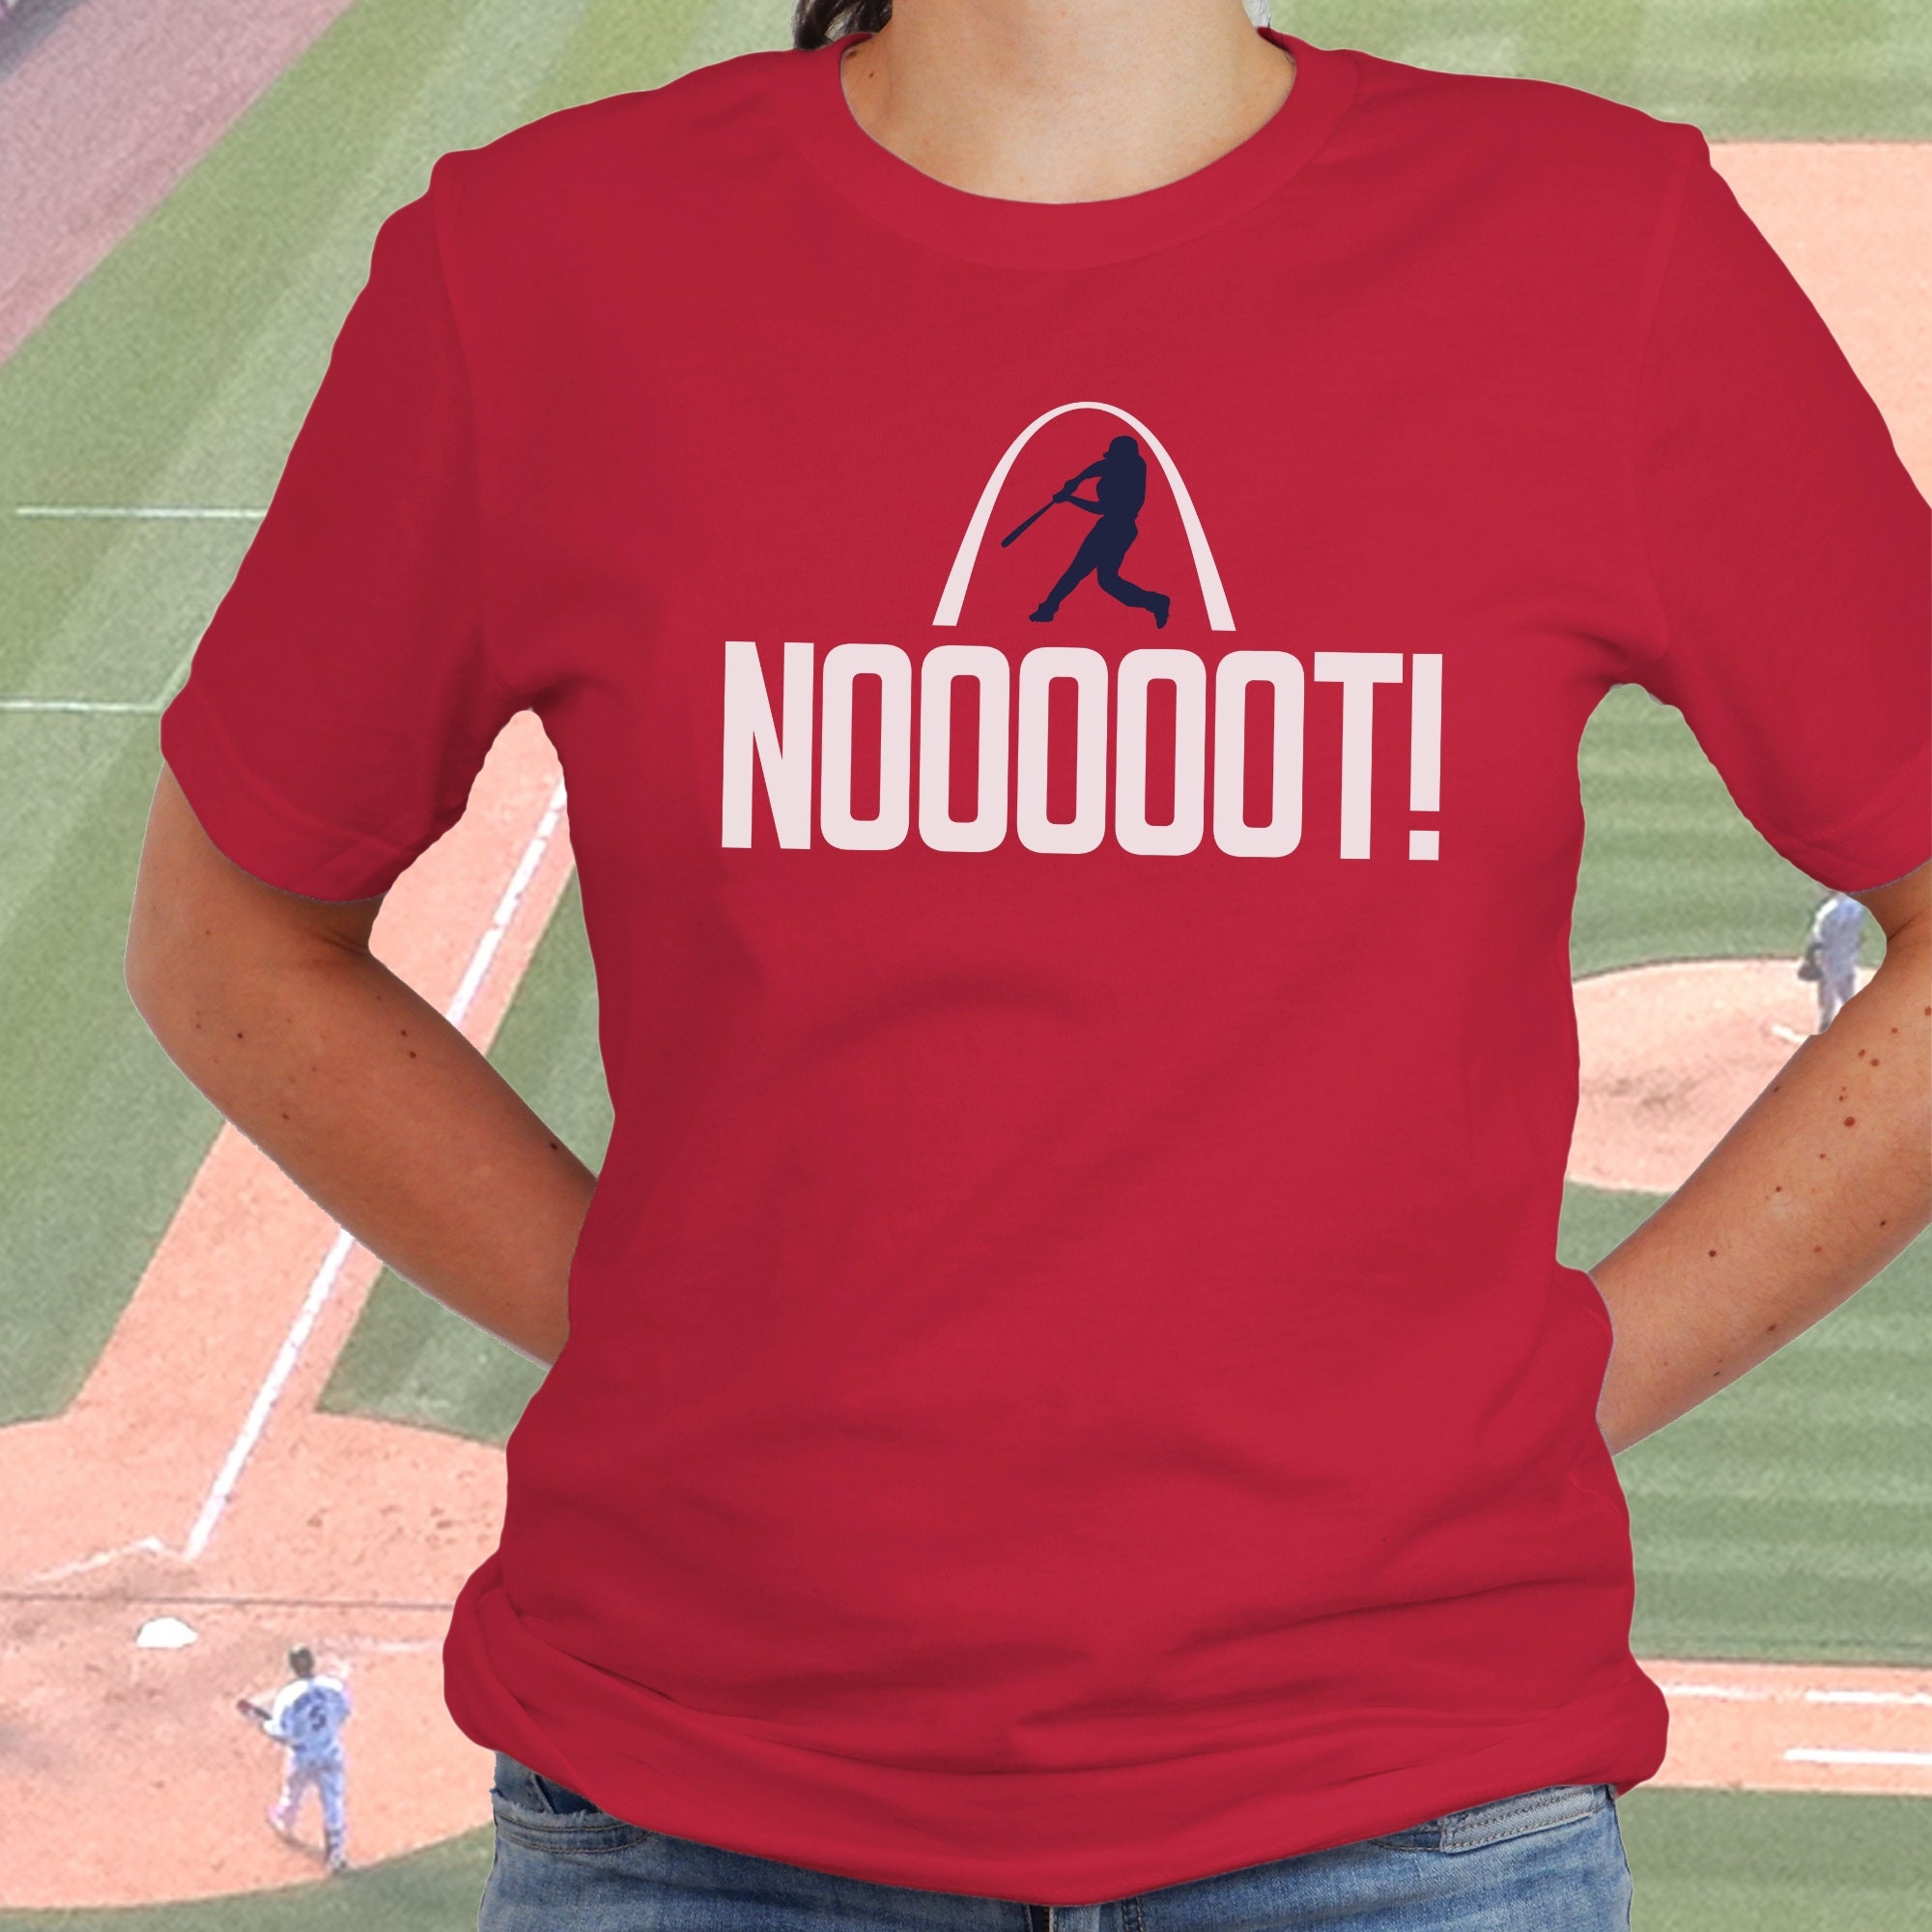 Lars Nootbaar Shirt St Louis Baseball Tshirt Stl Baseball 